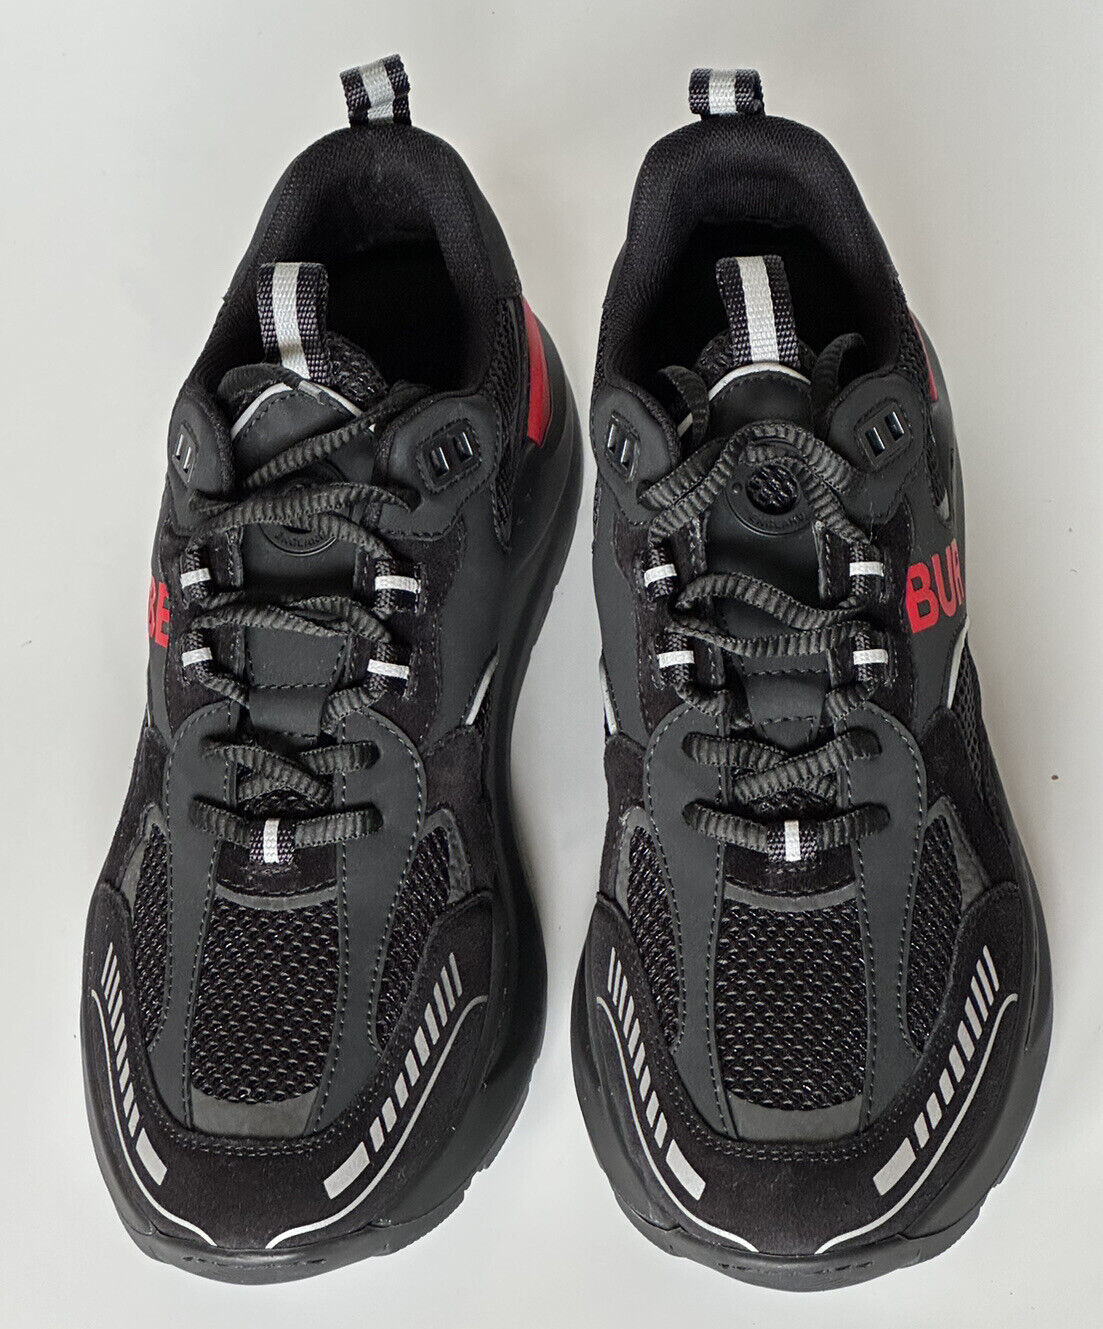 NIB 850 $ Burberry TNR Sean Herren-Sneaker in Schwarz/Rot 9,5 US (42,5 Eu) 8057350 IT 